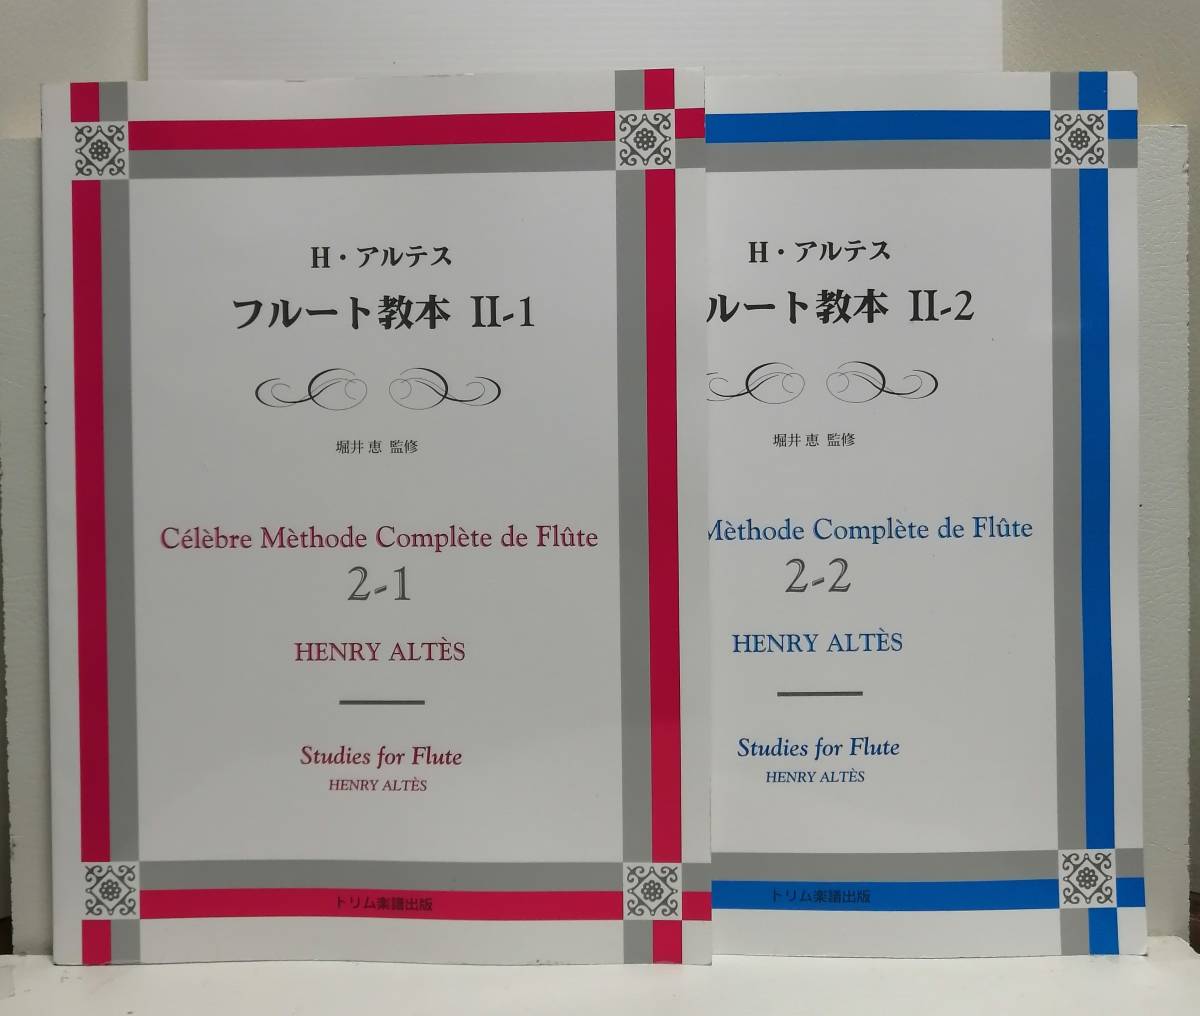 H. arte s flute textbook Ⅱ- 1*2 2 pcs. set beautiful book@!